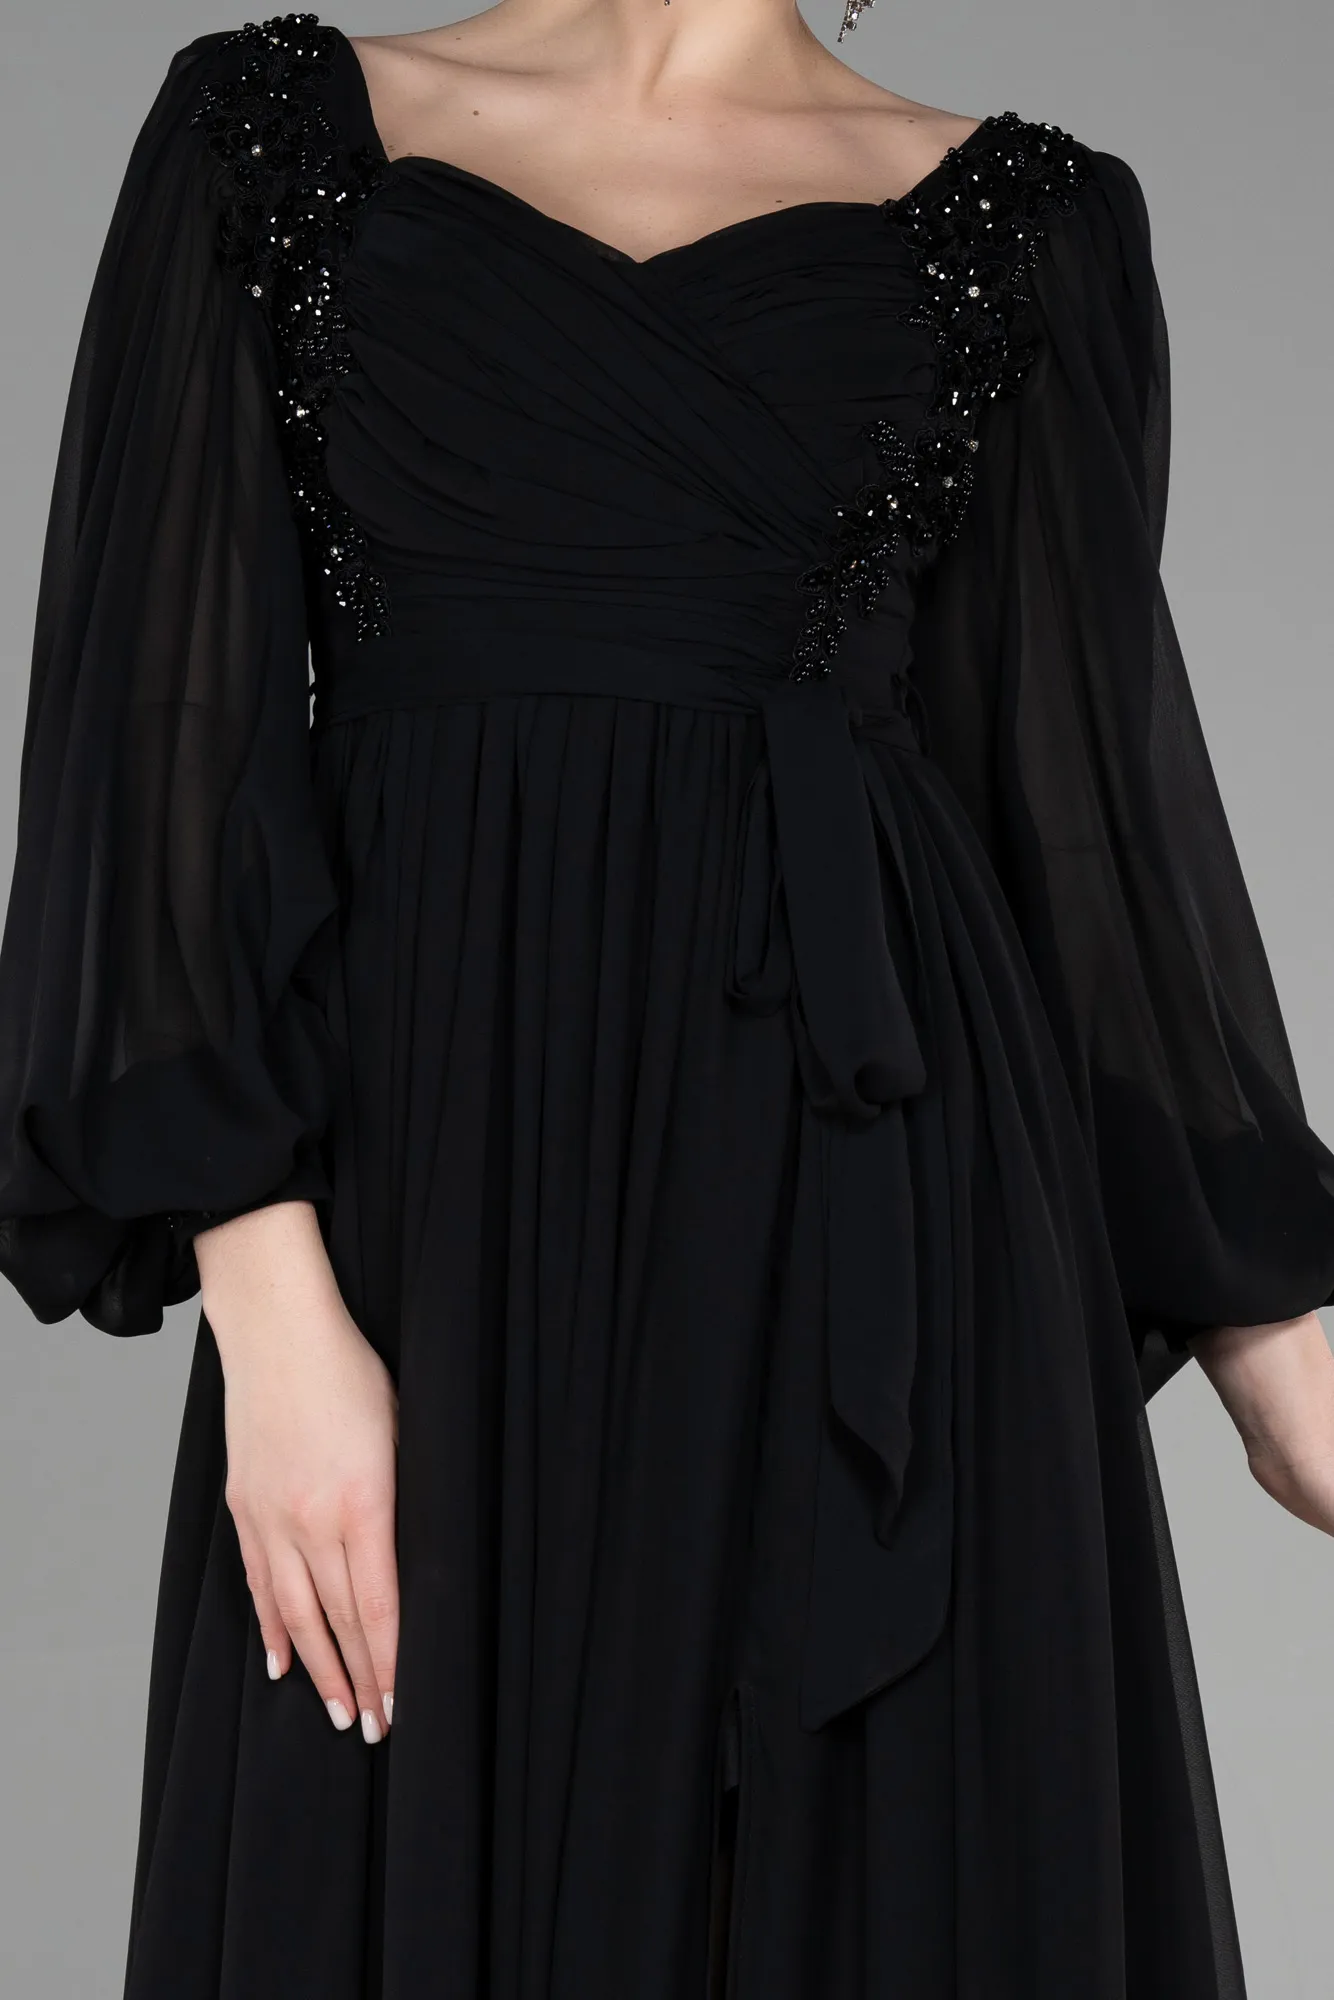 Black-Long Chiffon Evening Dress ABU3243